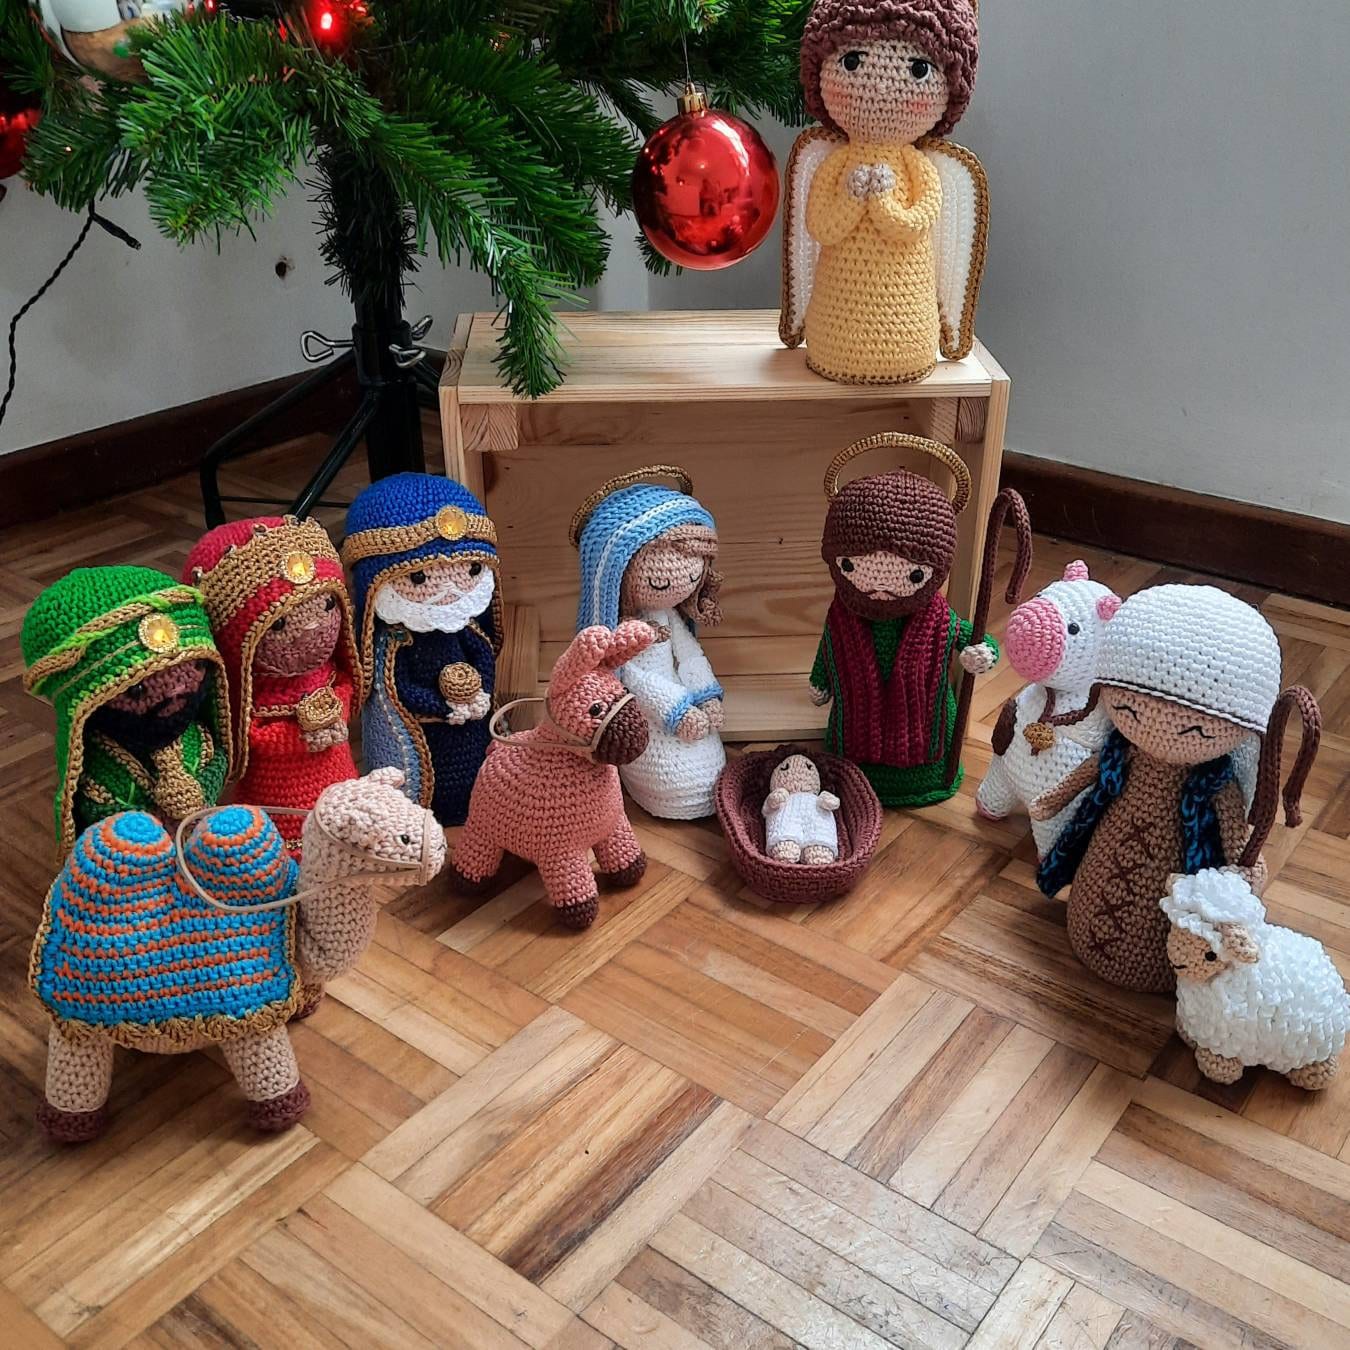 Crochet Kit: Creativa: Amigurumi: Christmas Nativity - Anchor - Groves and  Banks